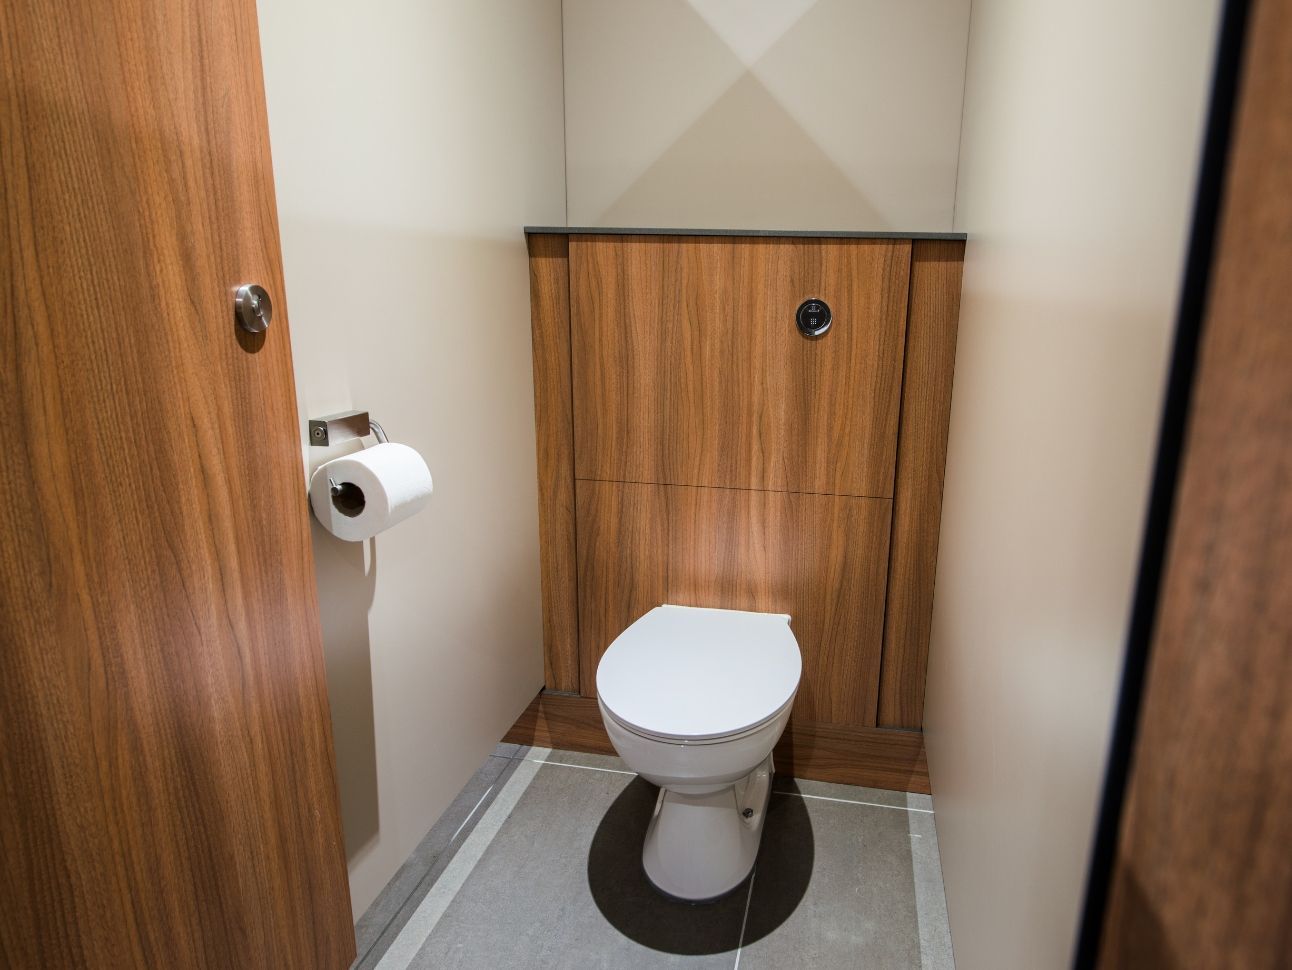 Wimbledon Park Golf Club Washroom Refurbishment | Commercial Washrooms